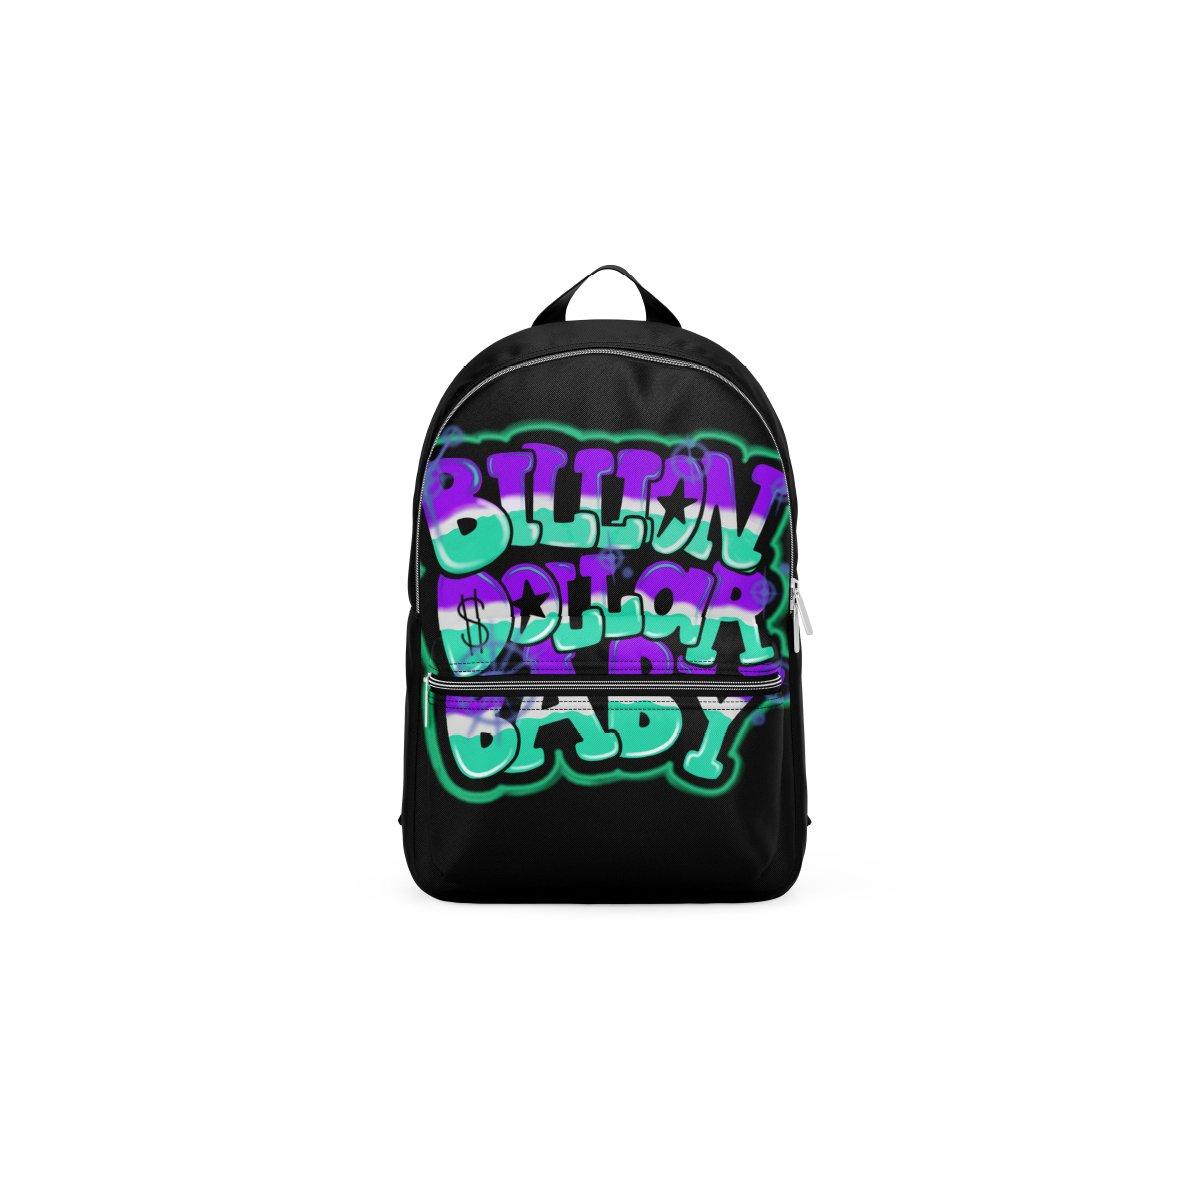 adidas graffiti backpack